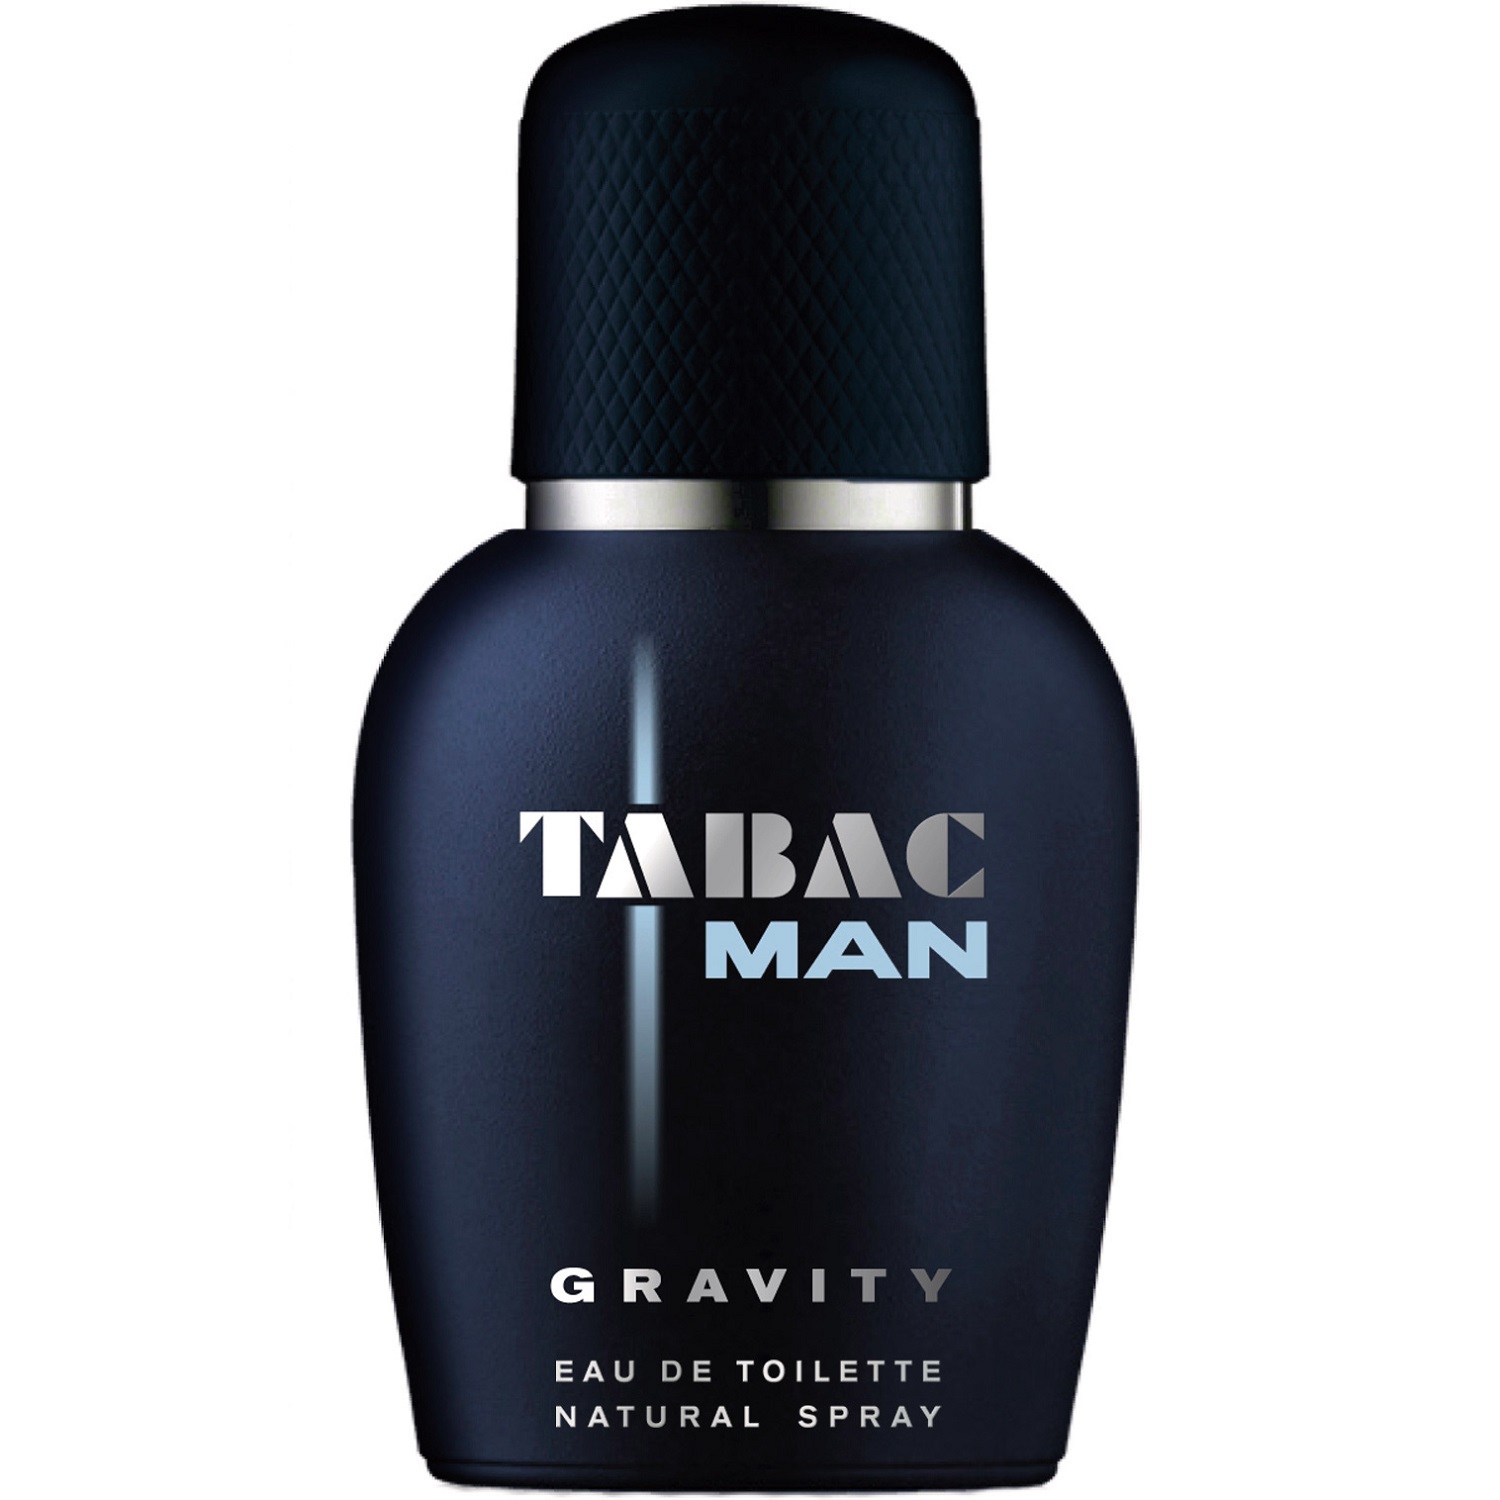 

Maurer & Wirtz - Tabac Man Gravity (50мл)